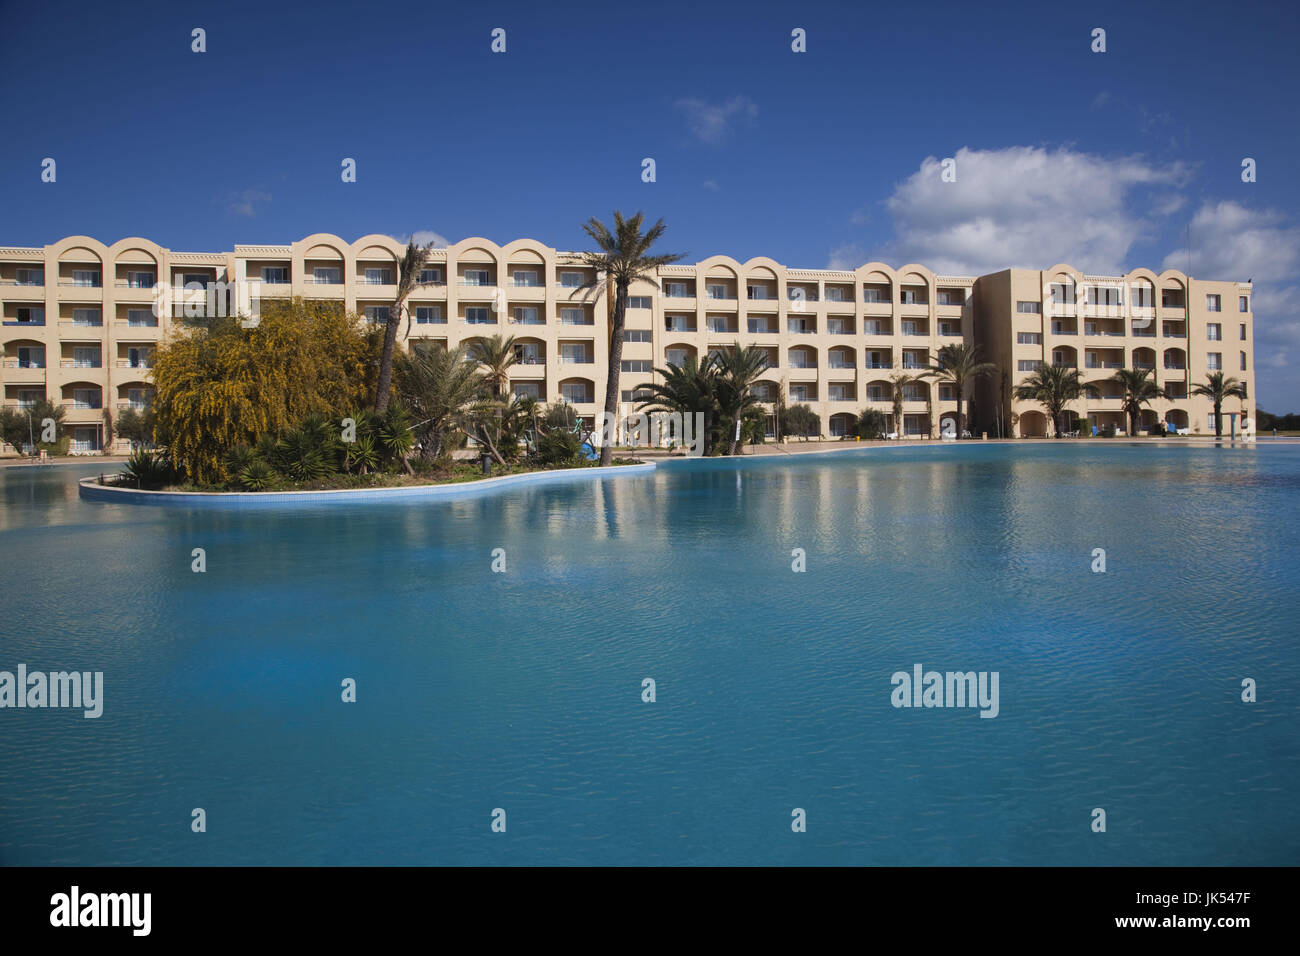 Tunisia, Tunisian Central Coast, Mahdia, Zone Touristique, Vinci Resort Nour Palace Hotel Stock Photo